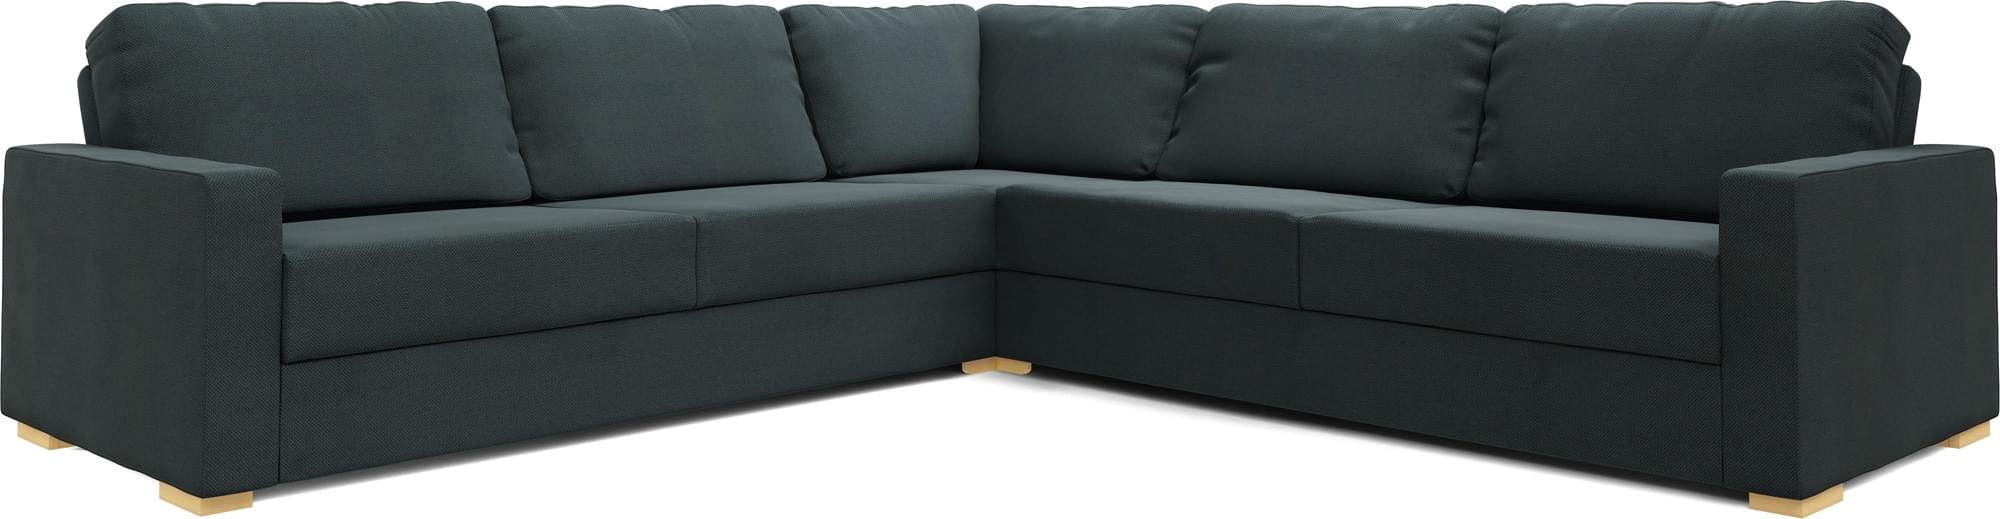 Ula 3X3 Corner Sofa